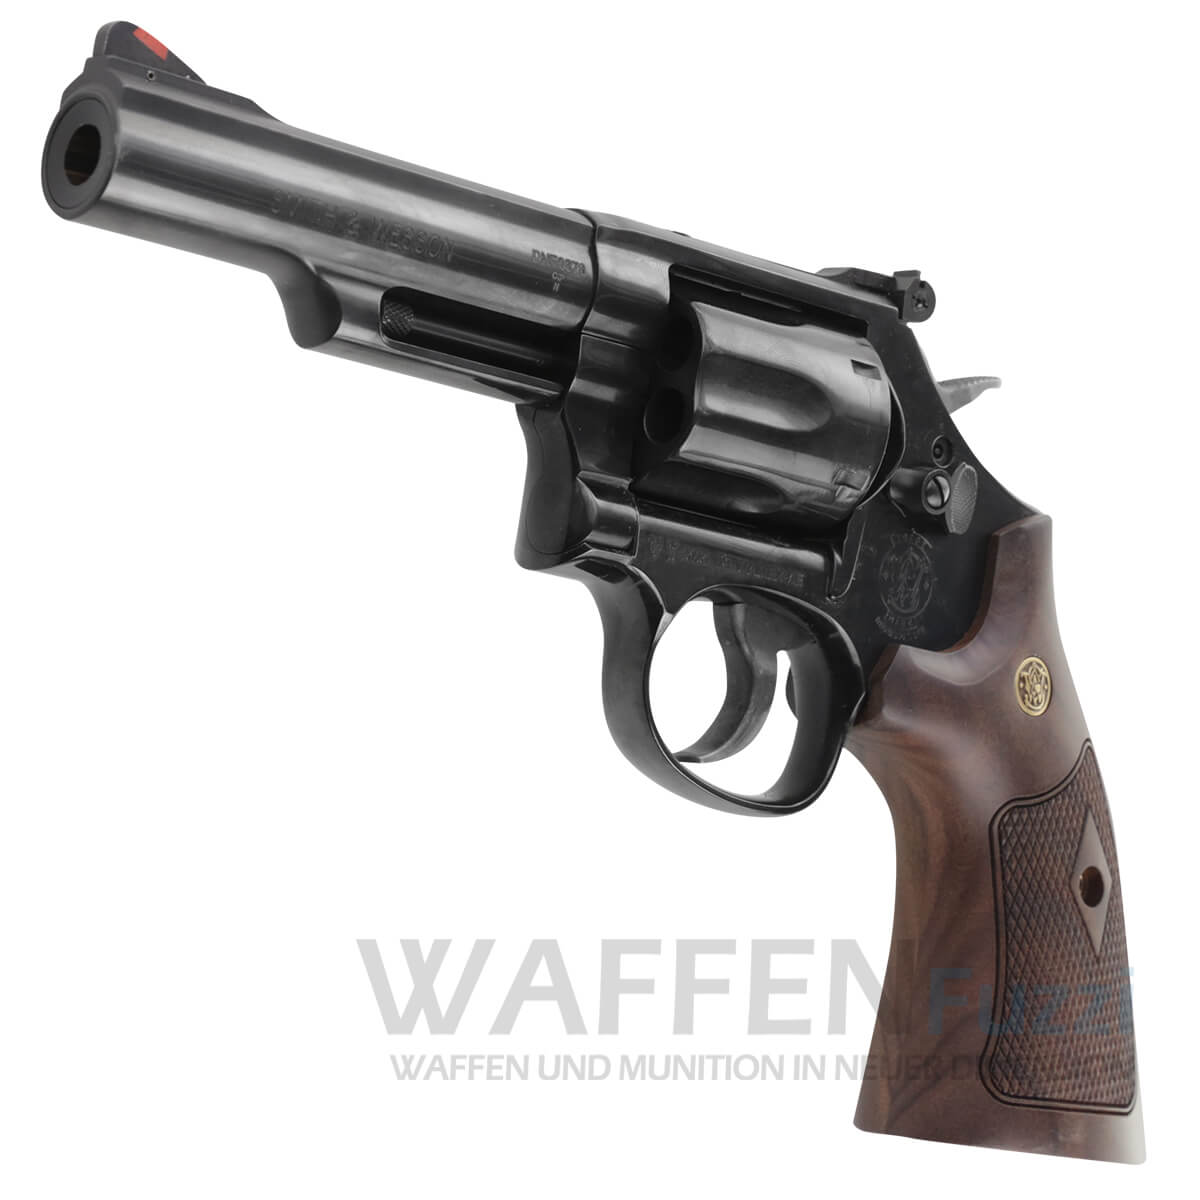 Smith&Wesson Revolver in hochglanz schwarz bei Waffenfuzzi.de